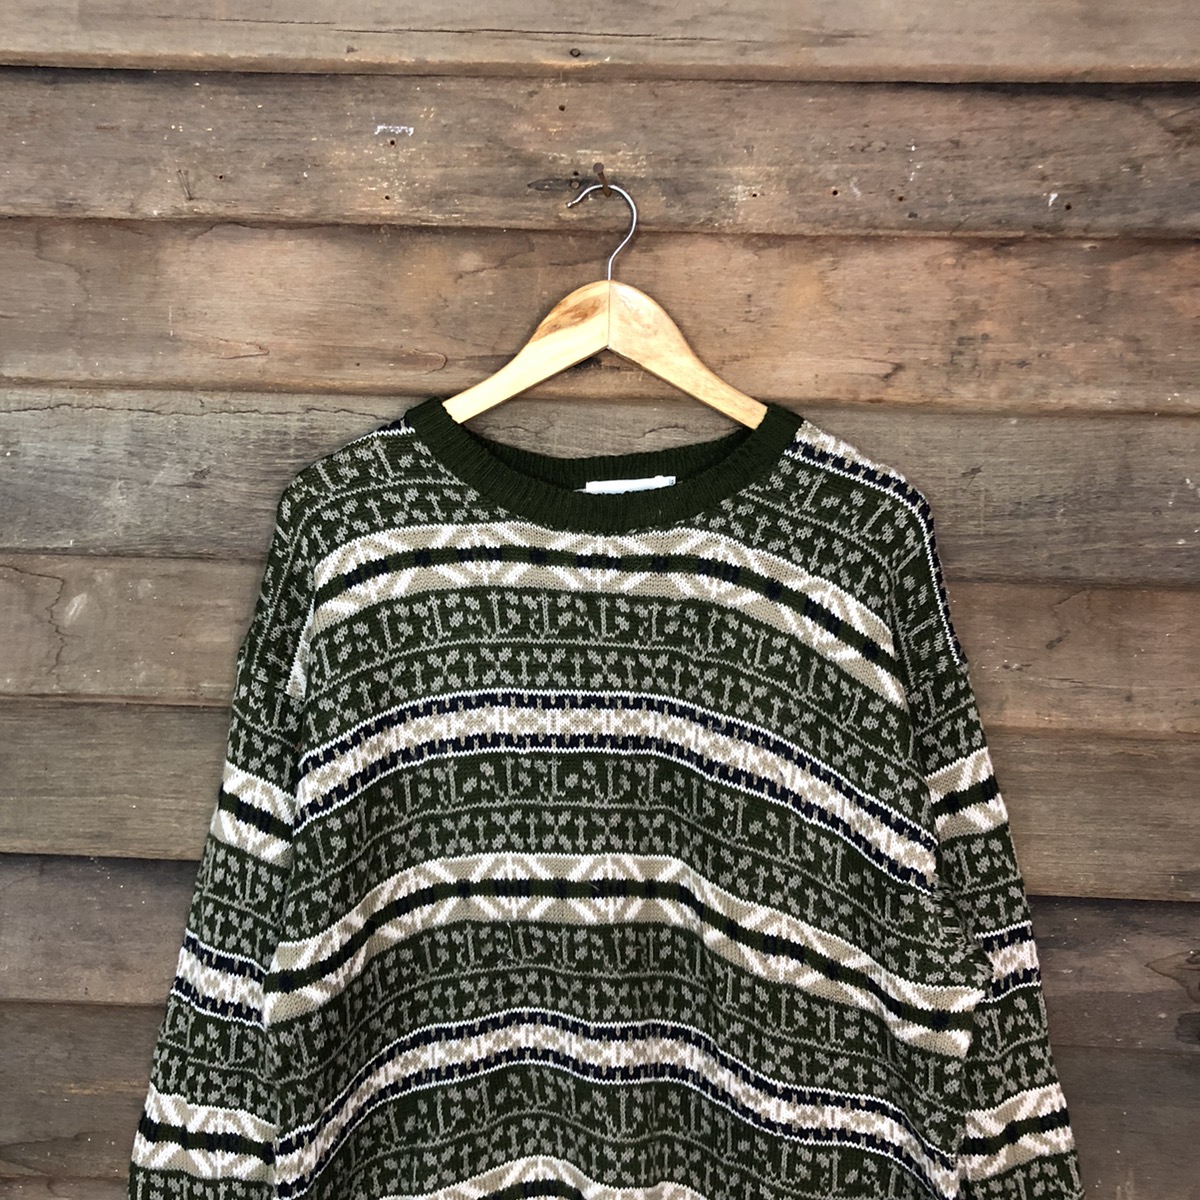 Homespun Knitwear - Yes Pleeze Patterned Knit Sweater - 2